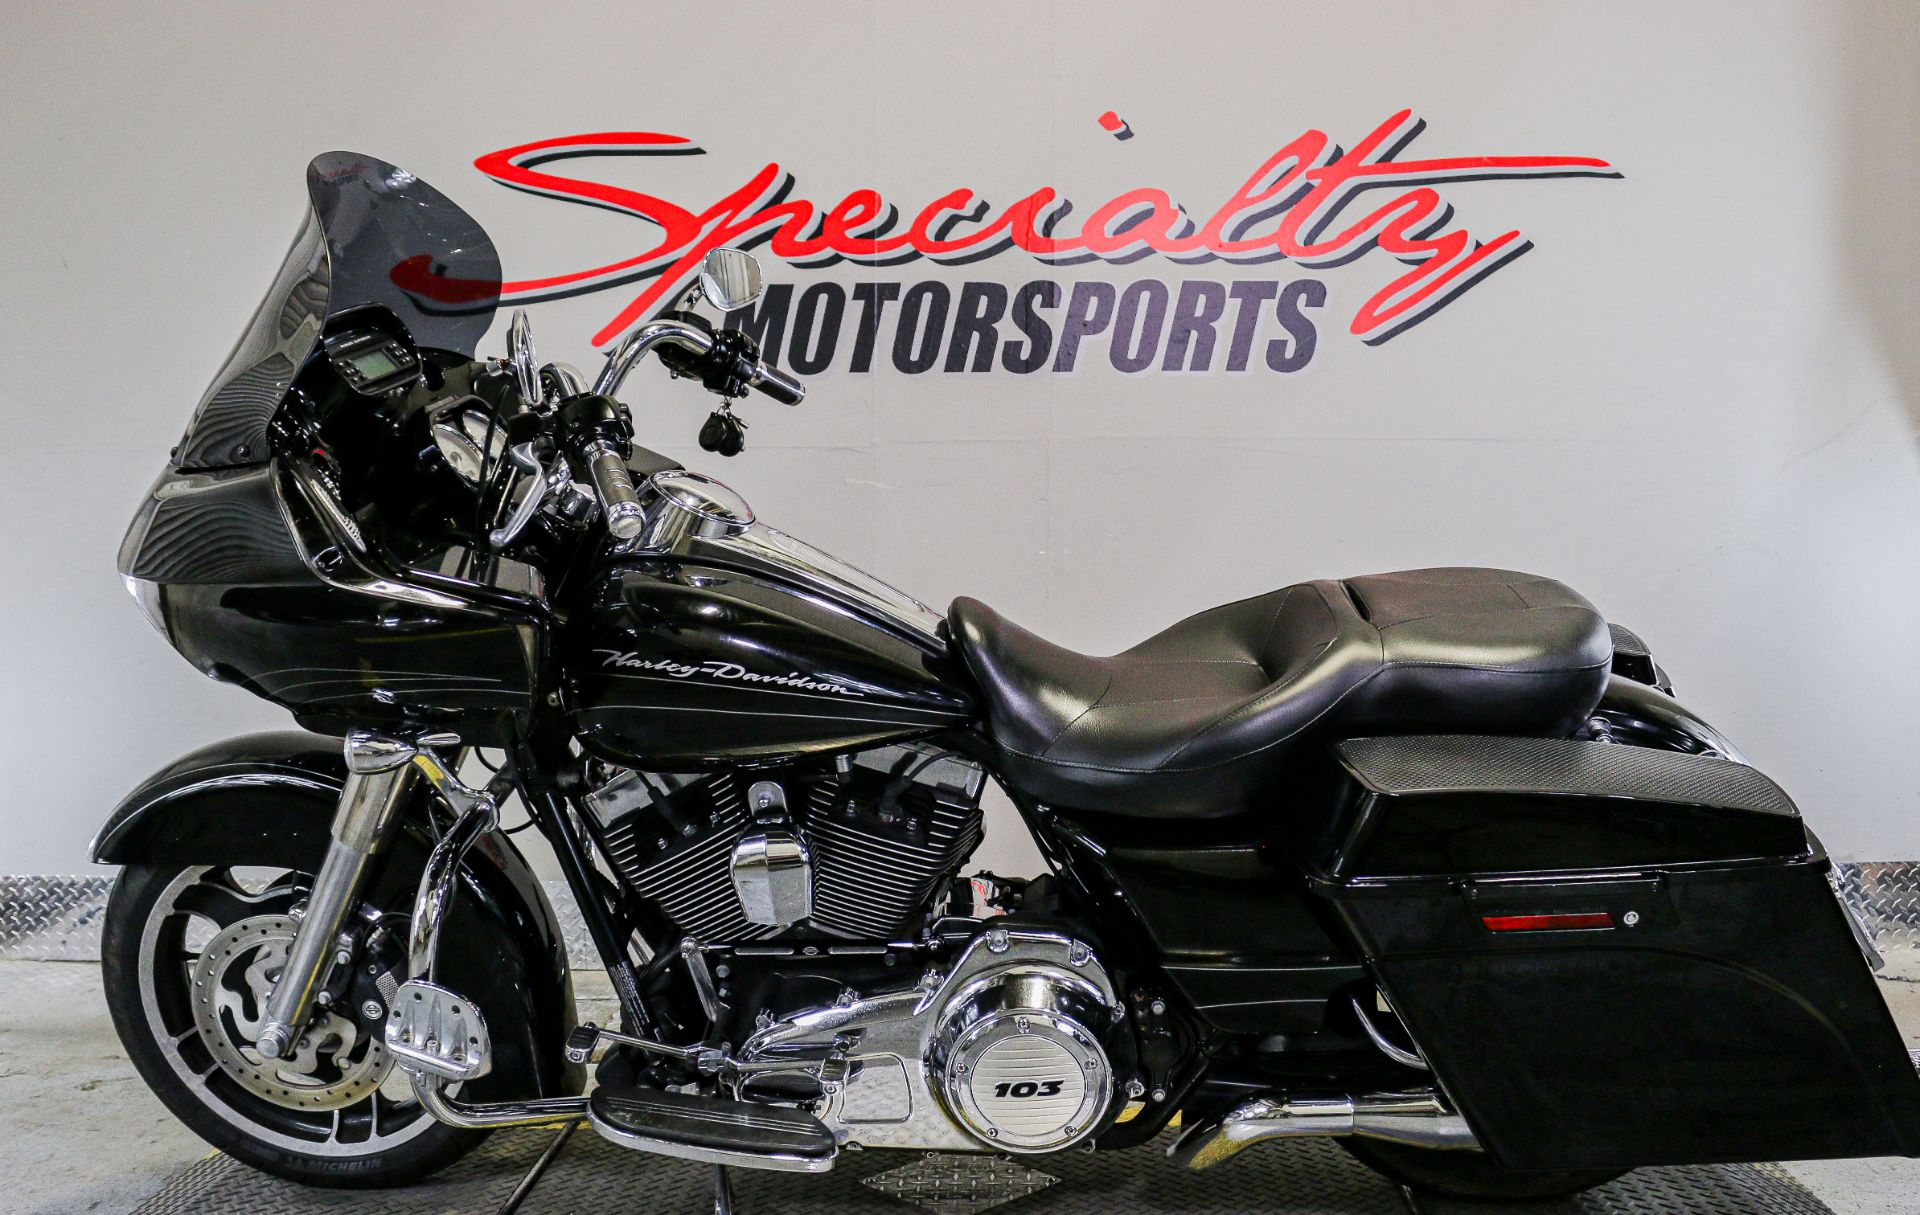 2013 Harley-Davidson Road Glide® Custom in Sacramento, California - Photo 4